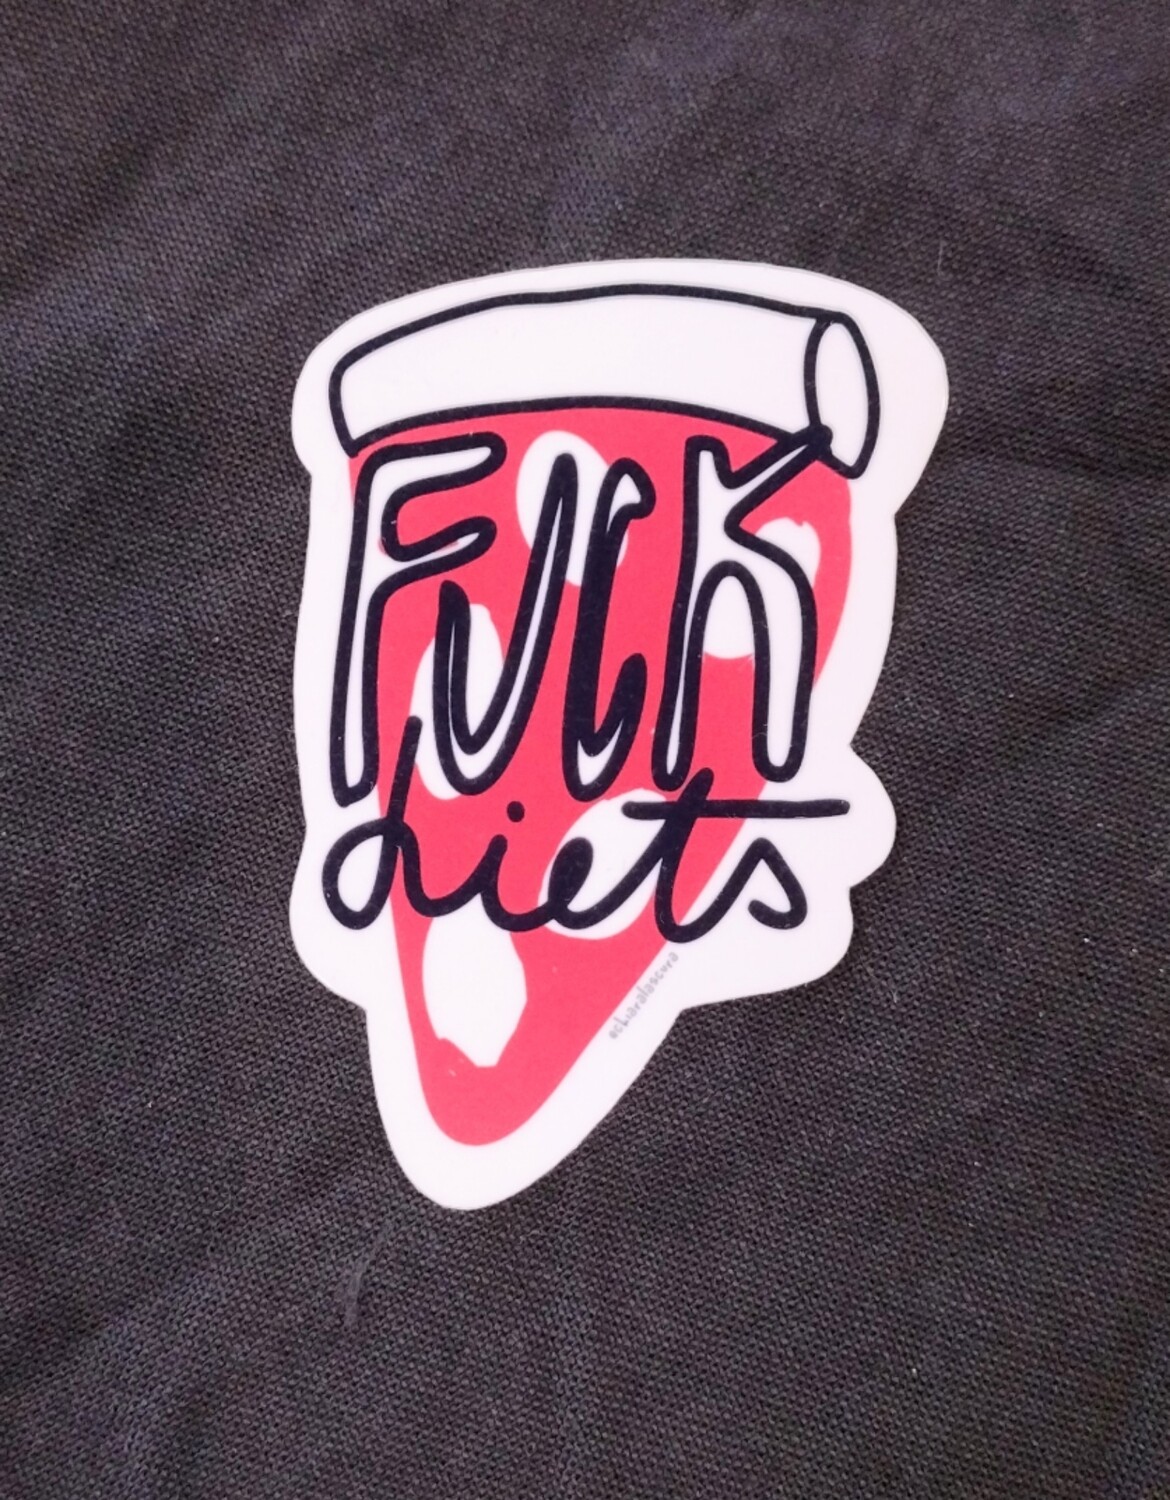 Fuck Diets - Sticker by Chiaralascura